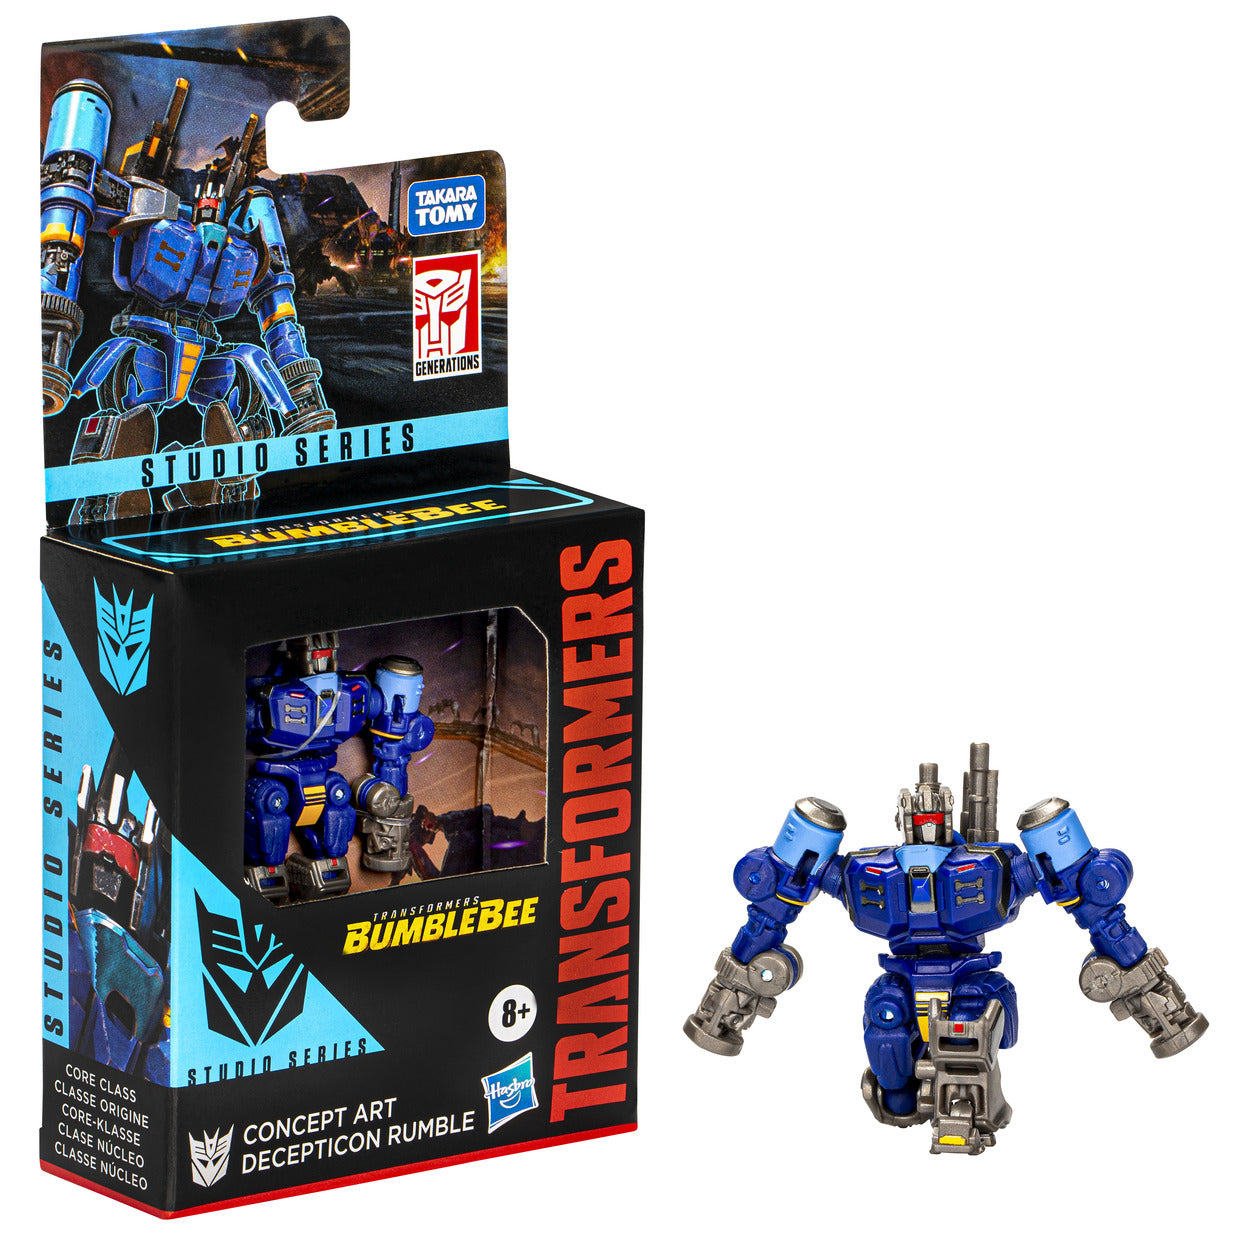 Transformers Studio Series Core - Concept Art Decepticon Rumble - Action Figure